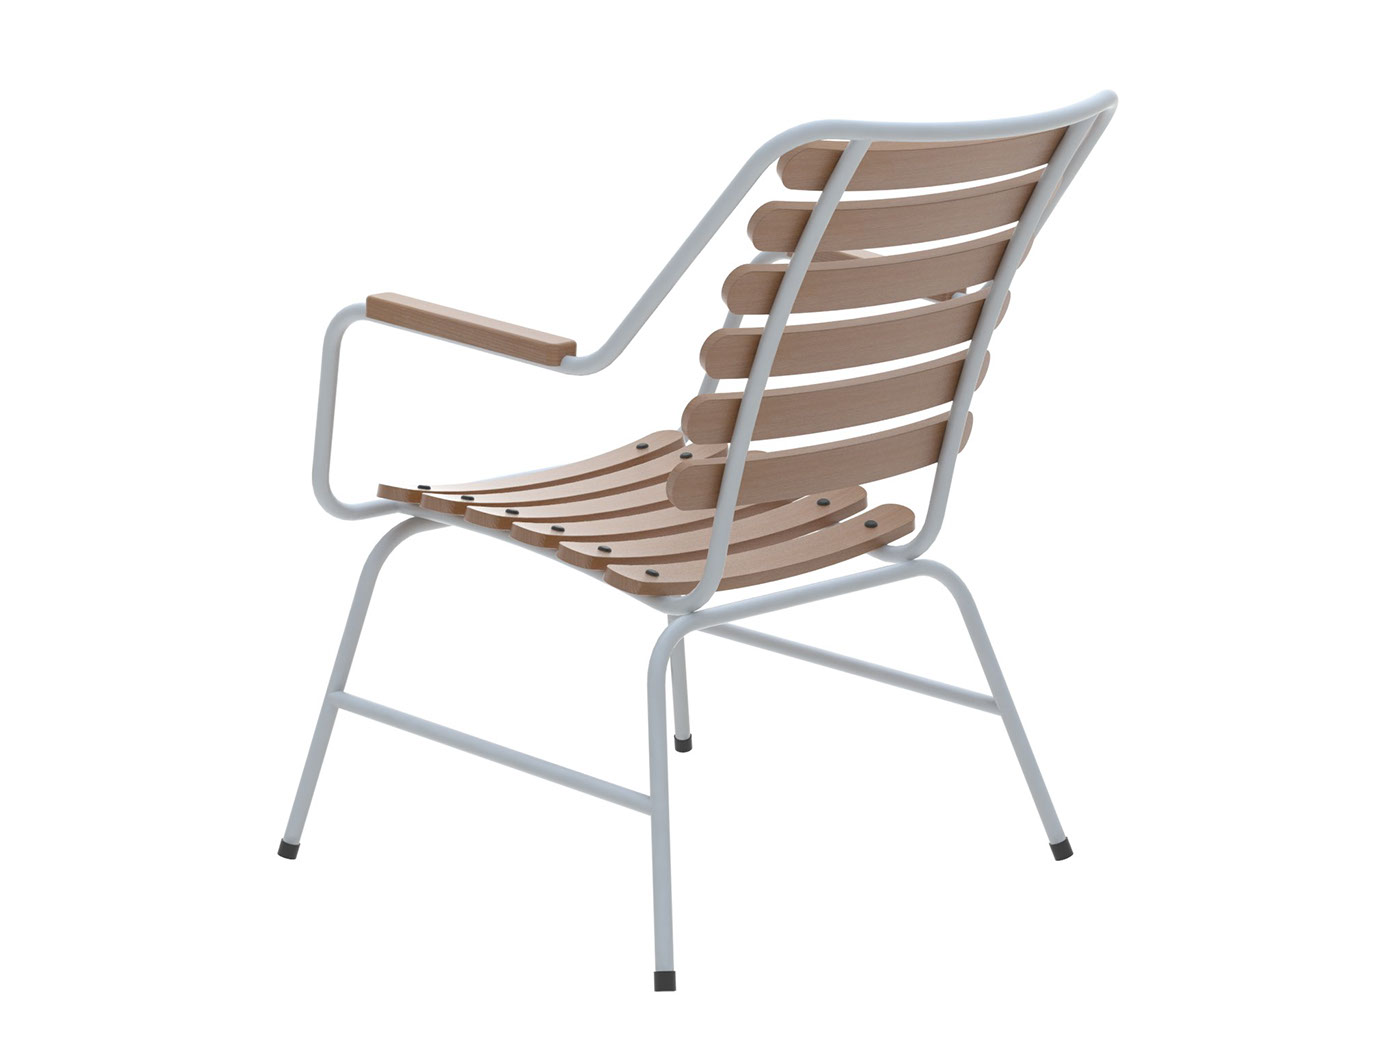 chair Lounge Chair Poltrona butaca garden furniture Outdoor chair